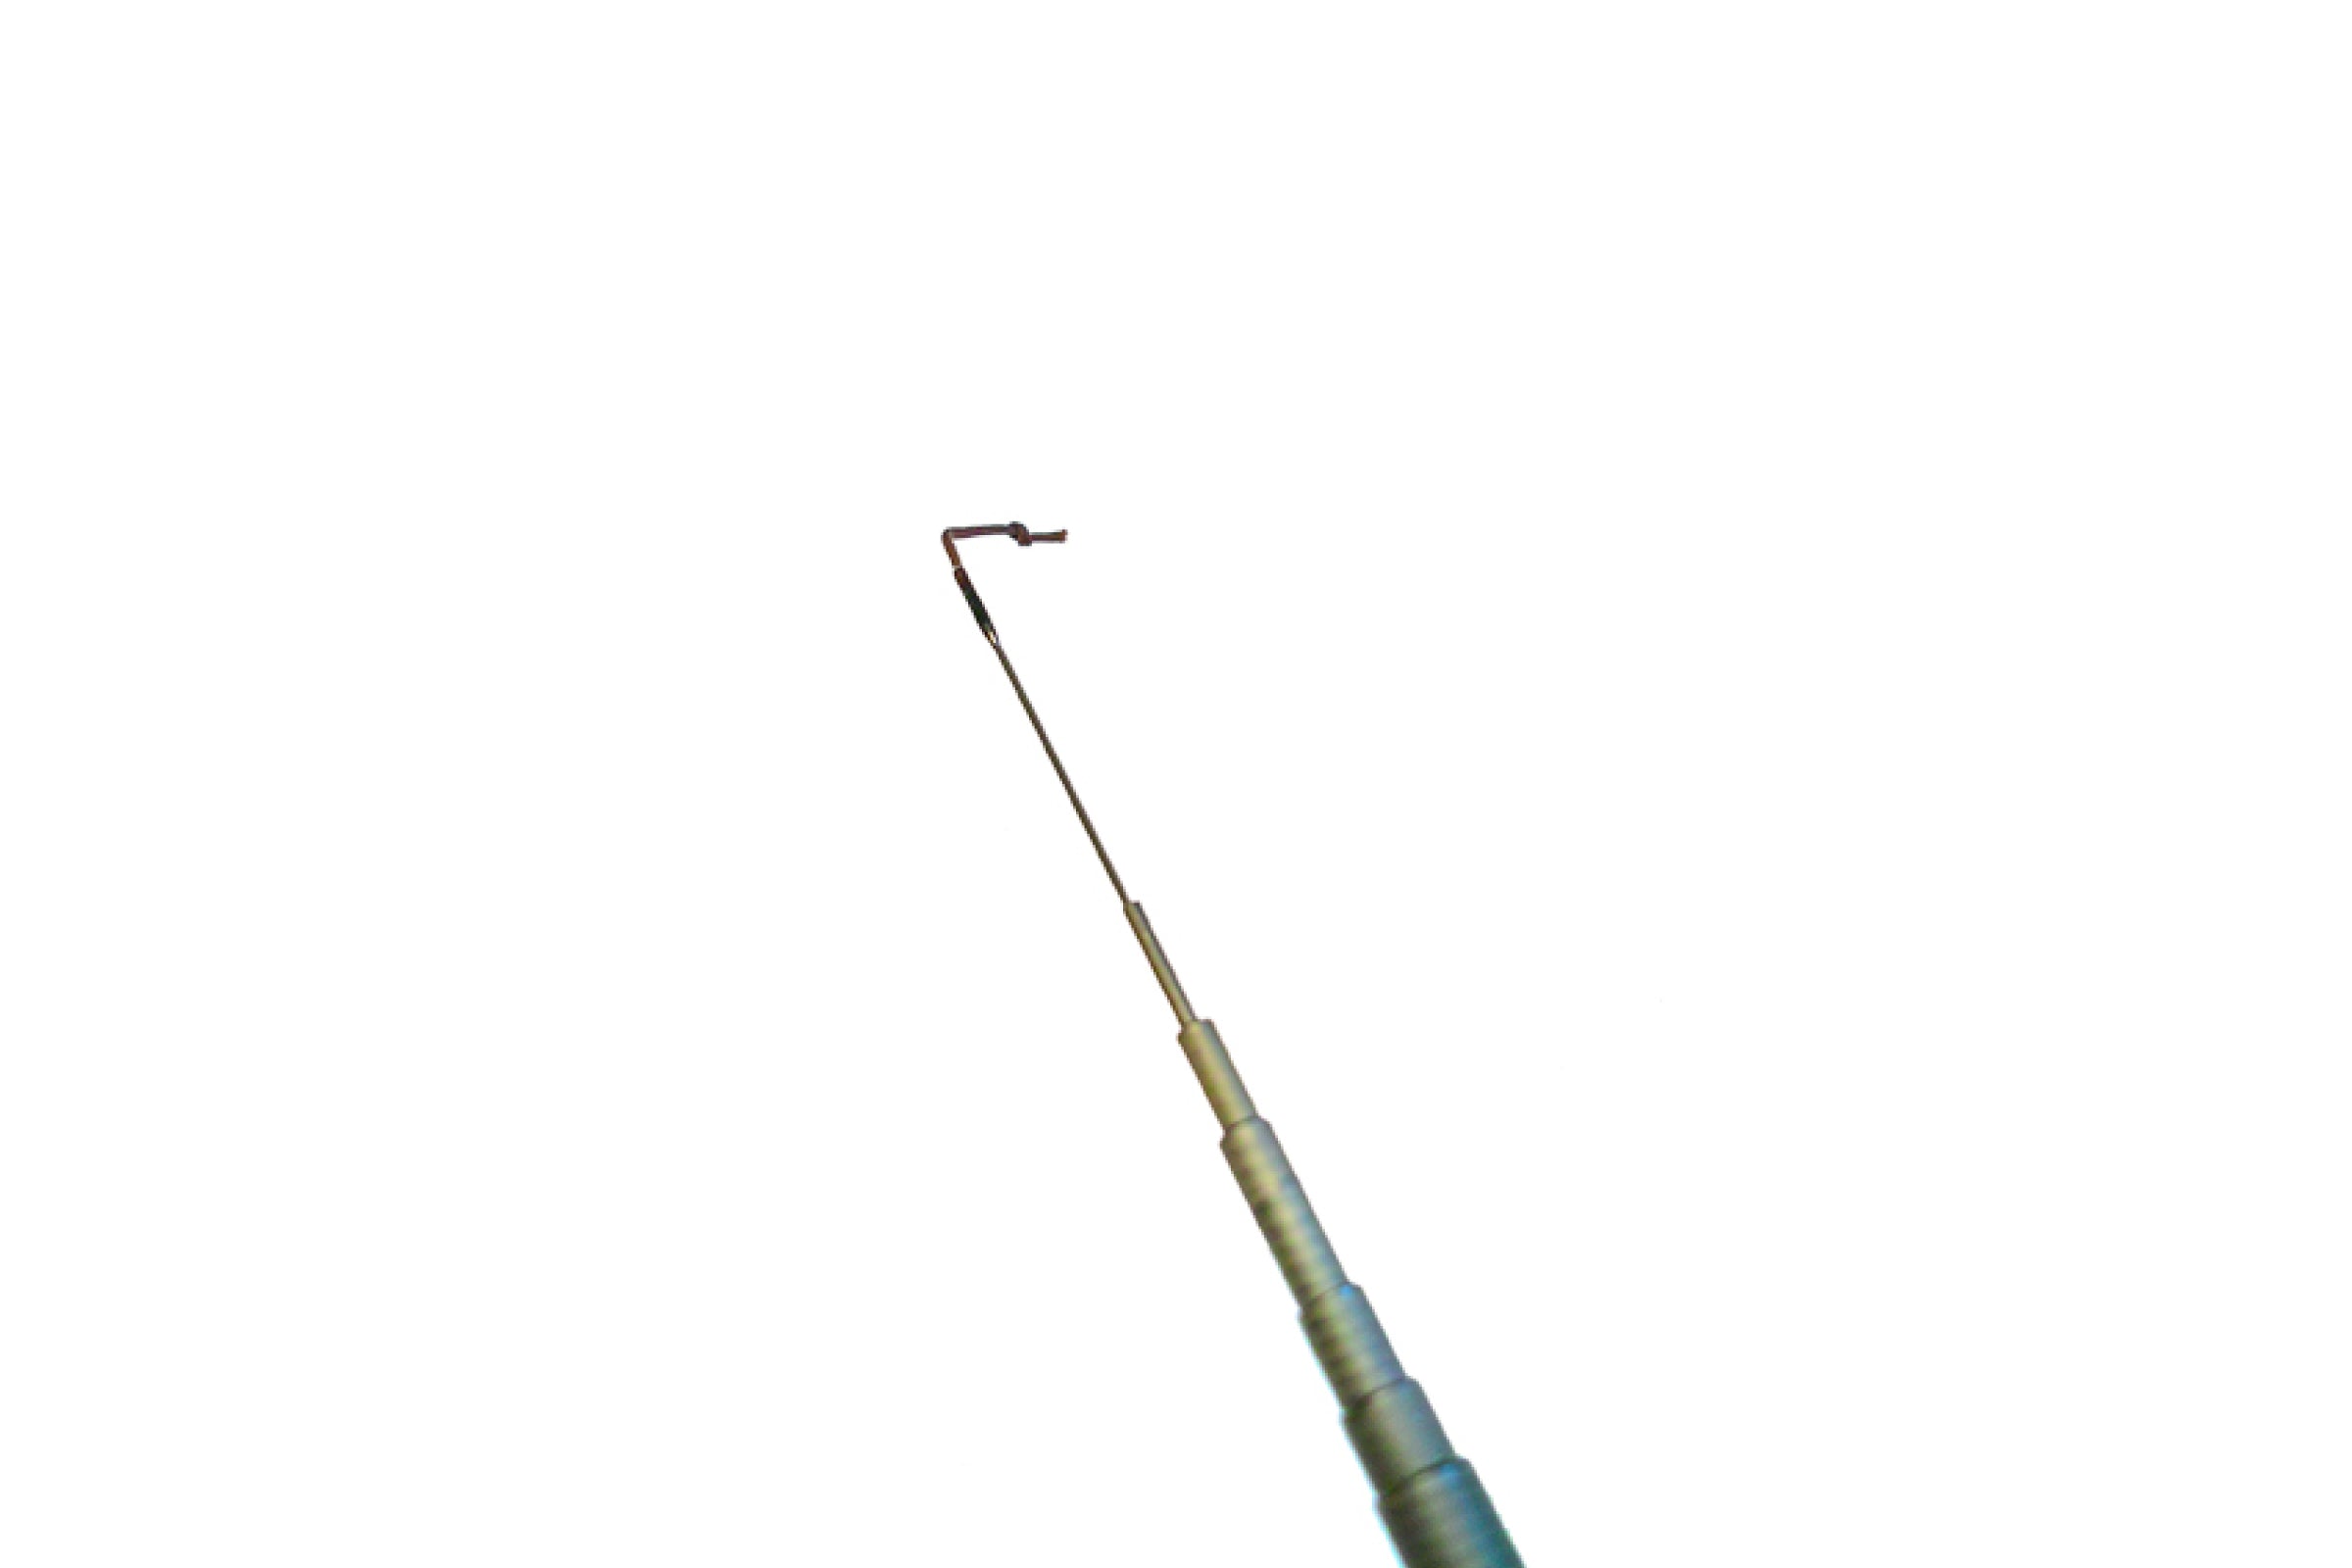 Replacement Parts for Tenkara Rods: Tenkara rod tips and plugs